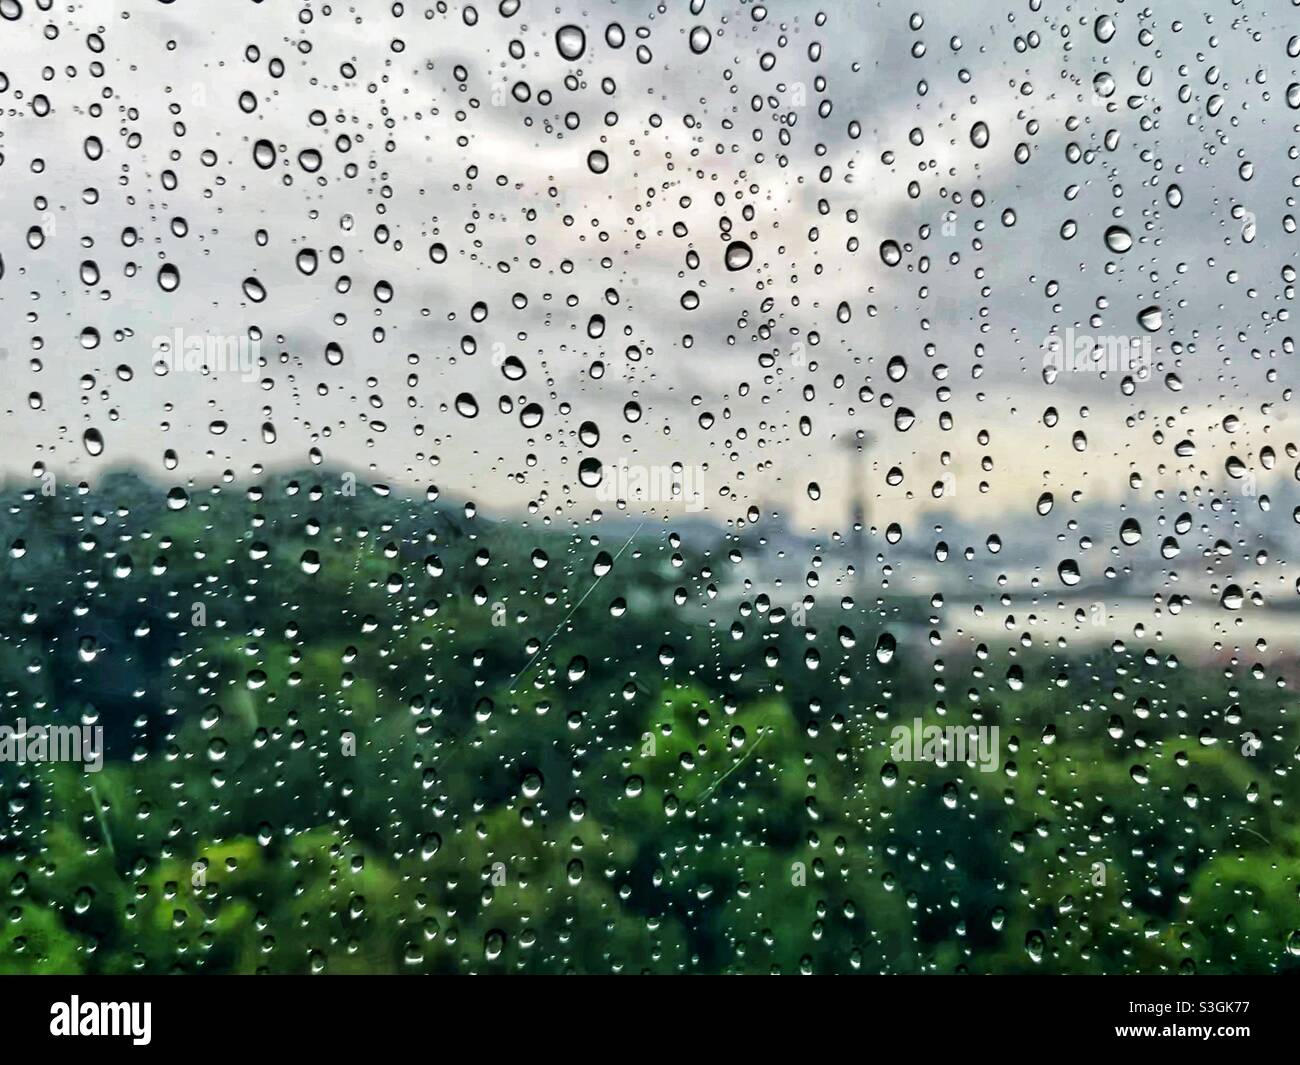 La lluvia cae en el cristal del teleférico Foto de stock